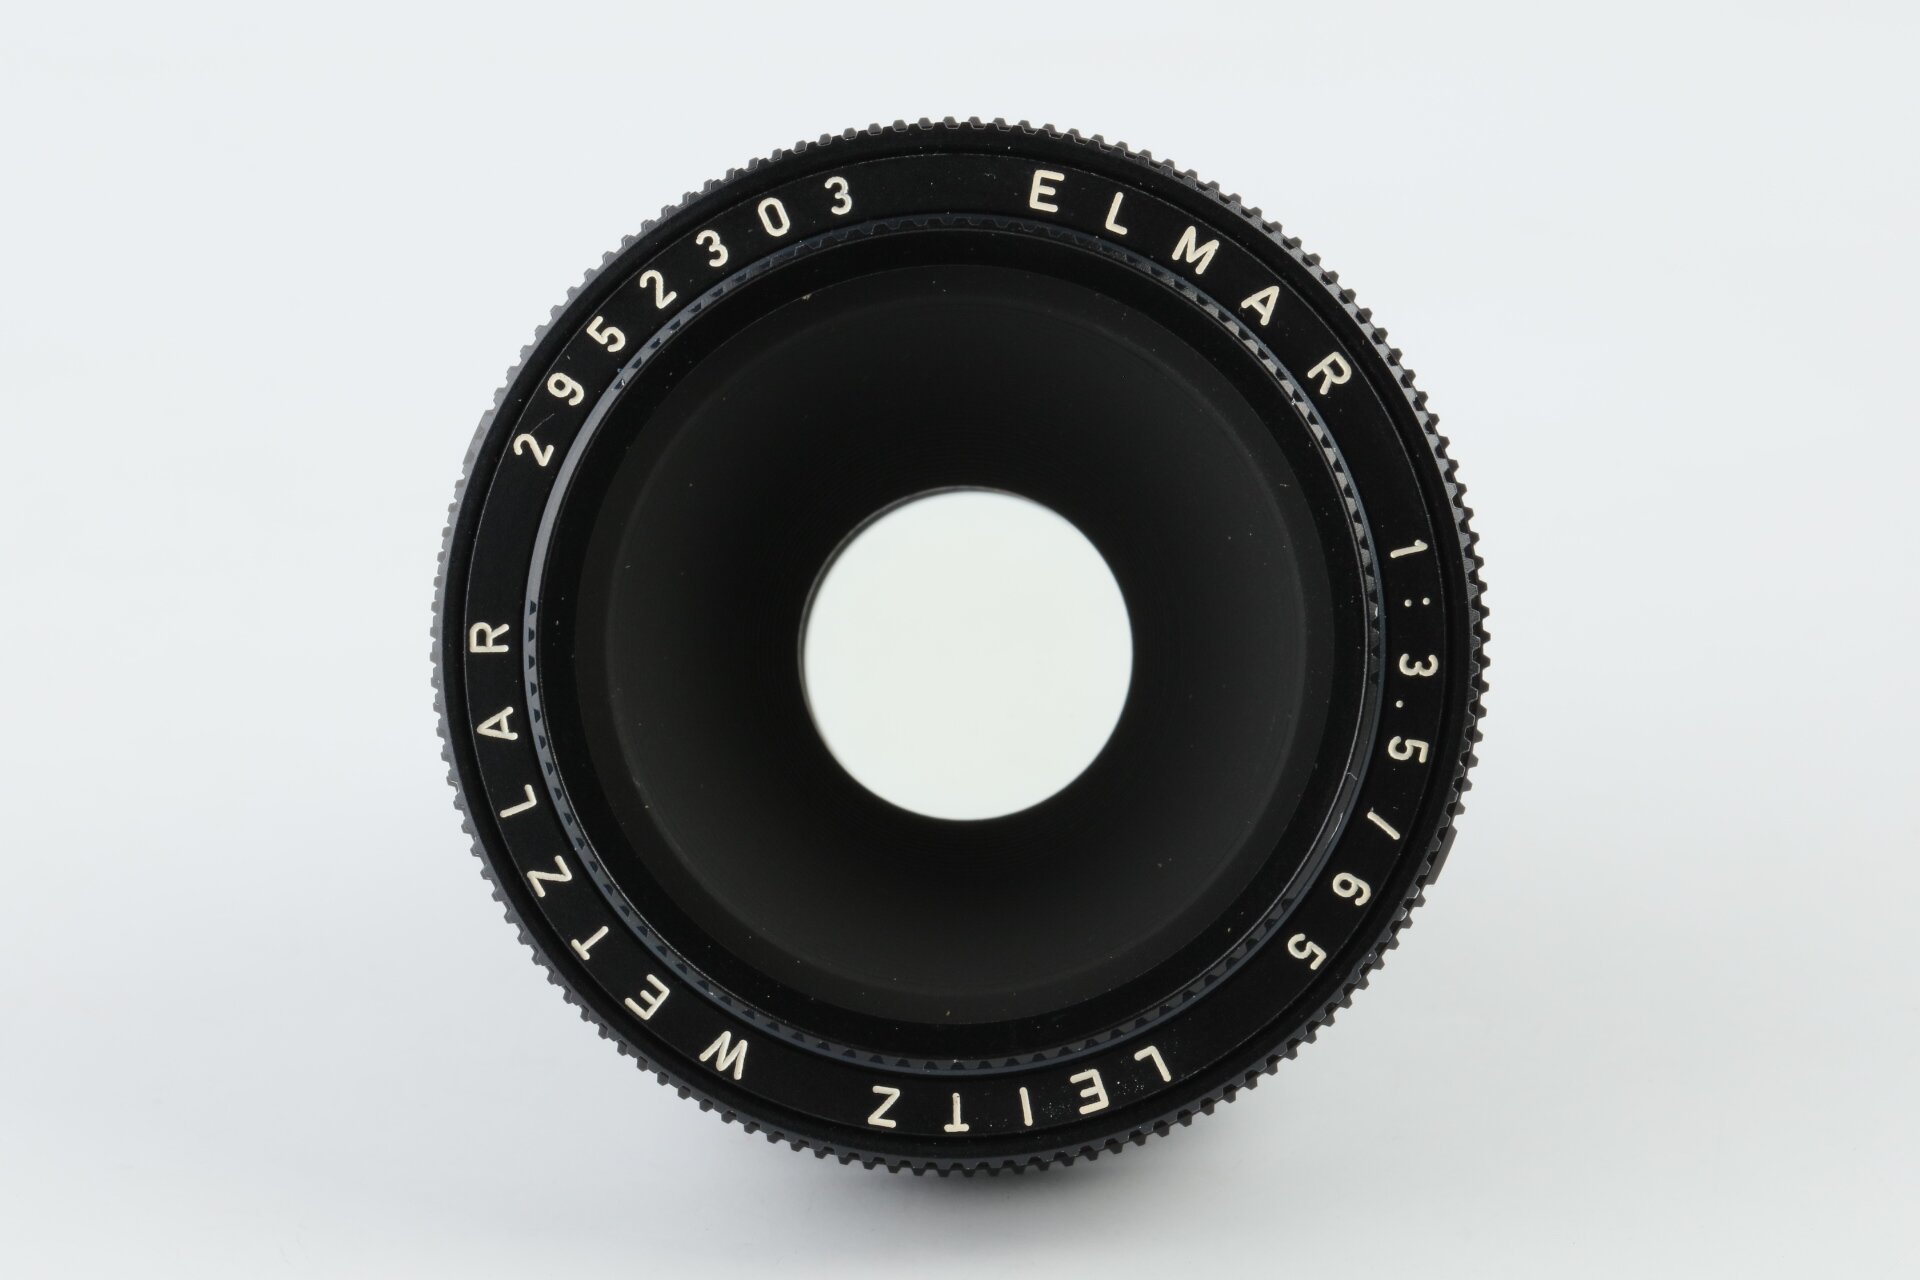 LEITZ Elmar-V 3,5/65mm schwarz 11162 Leica